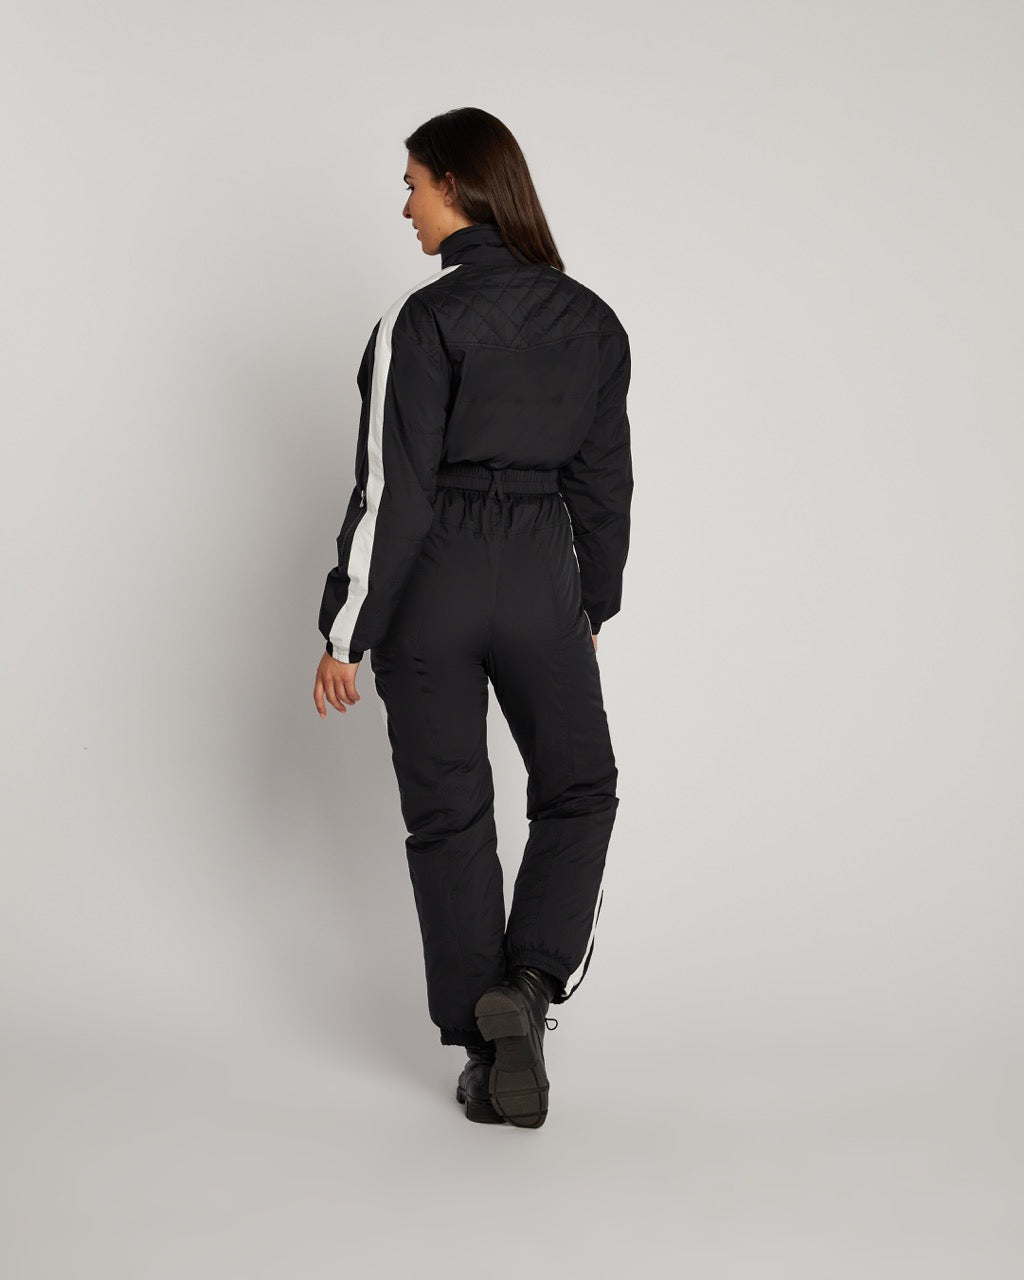 Snowroller Women's Lea Ski Suit in Black